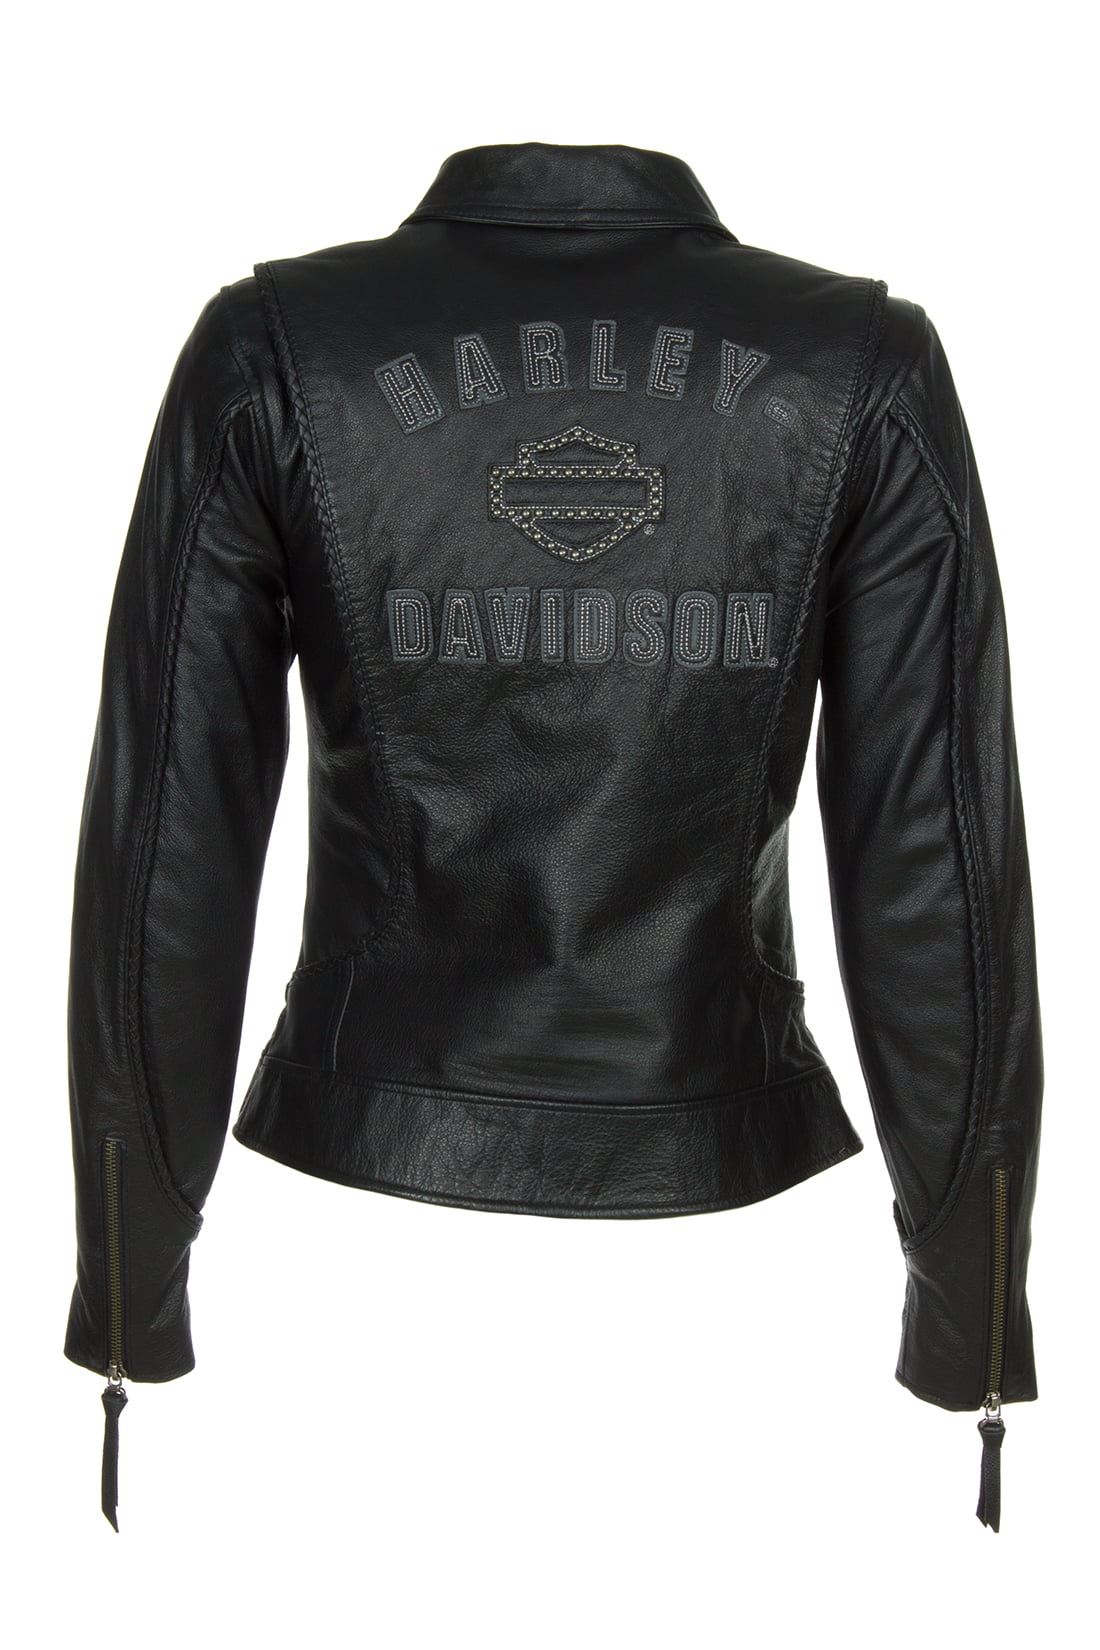 Harley Davidson 98064 13vw Women S Jacket Heritage Black Leather Walmart Com